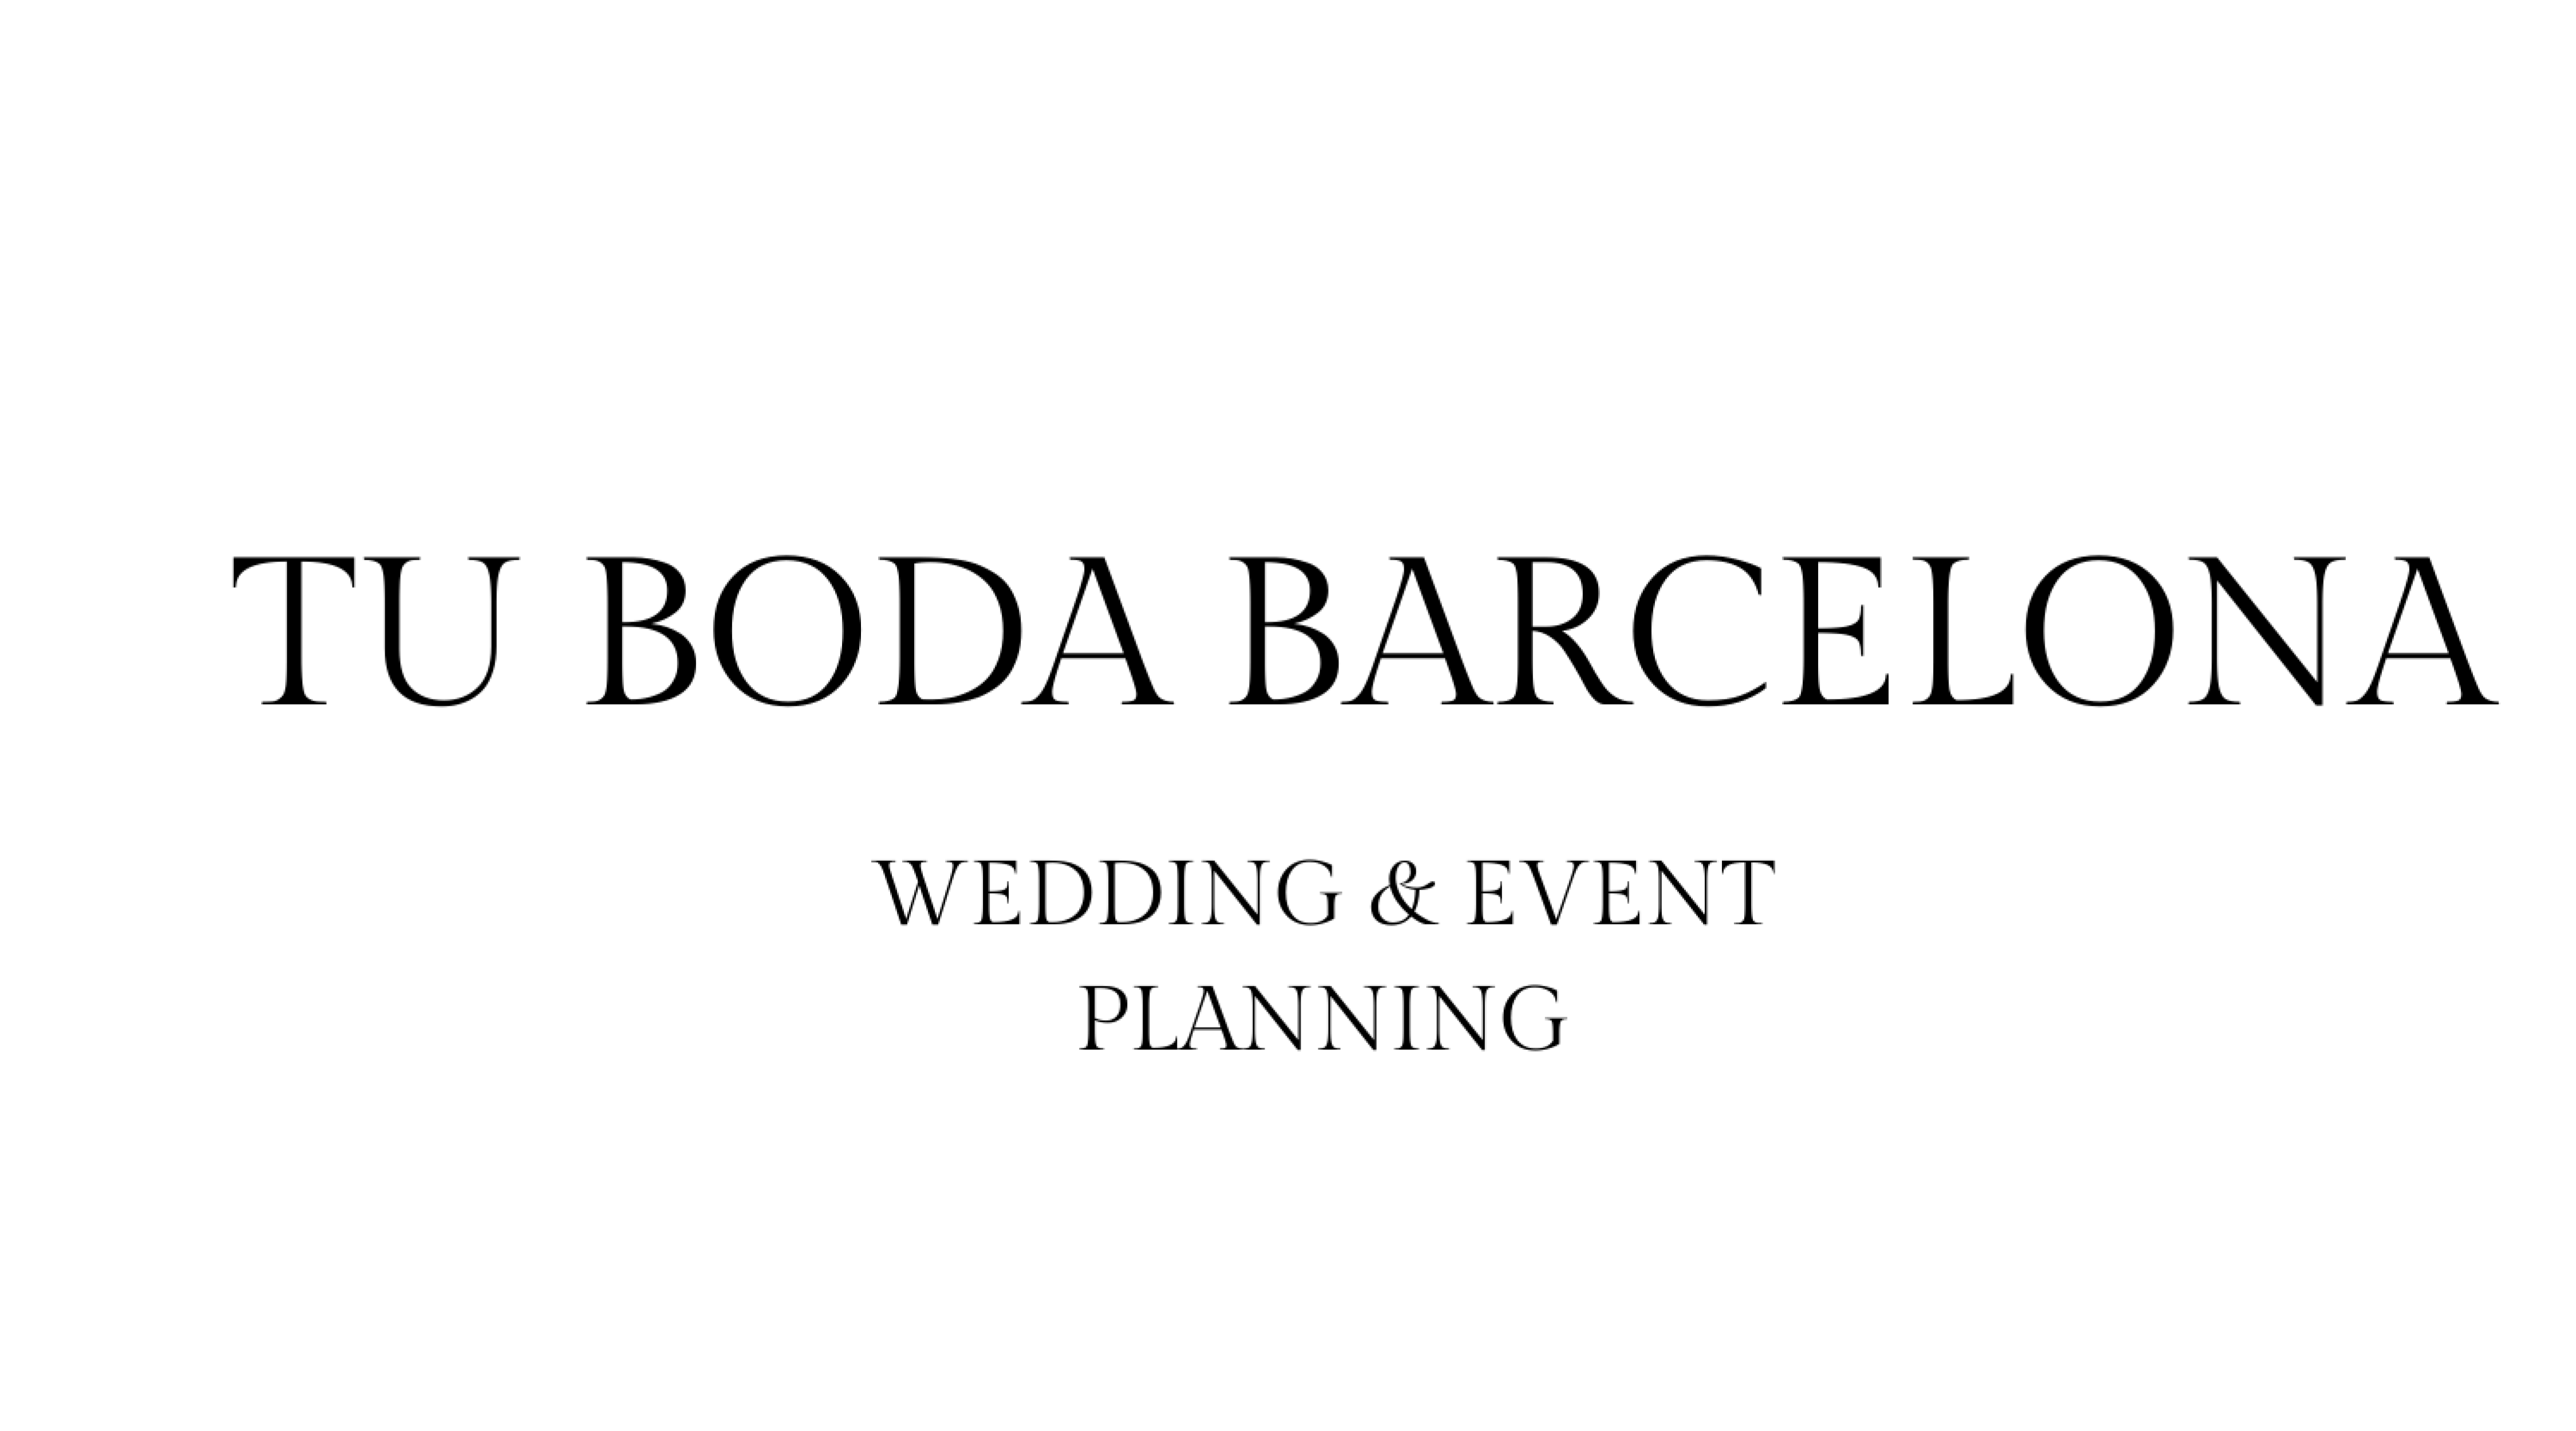 Copia de TU BODA BCN [Tamaño original] (24 x 19.4 cm) (25 x 25 cm) (24 x 15 cm) (24 x 10 cm)